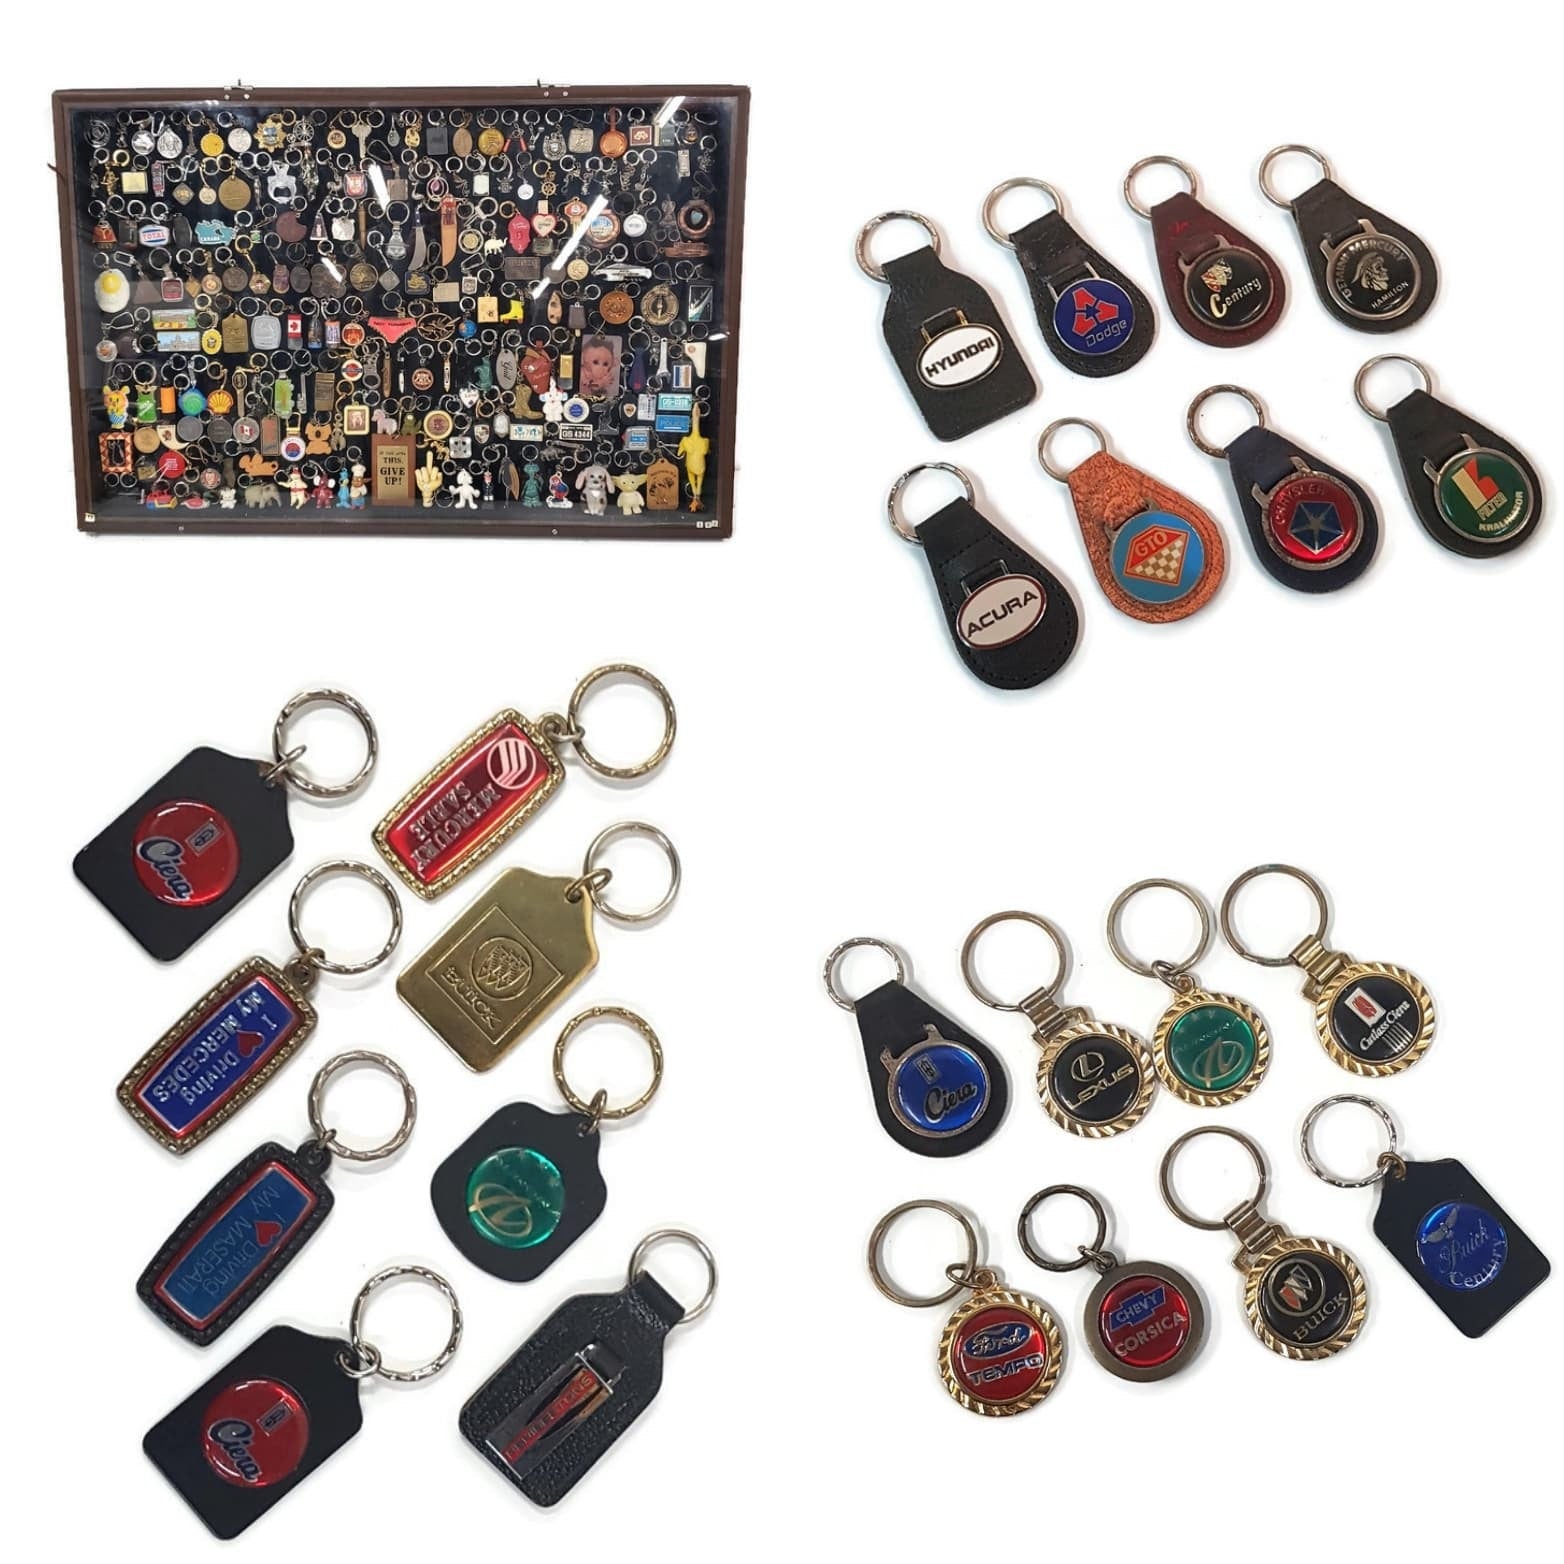 ford probe key chain keychain key fob keytag vintage automotove keychain gift collectible